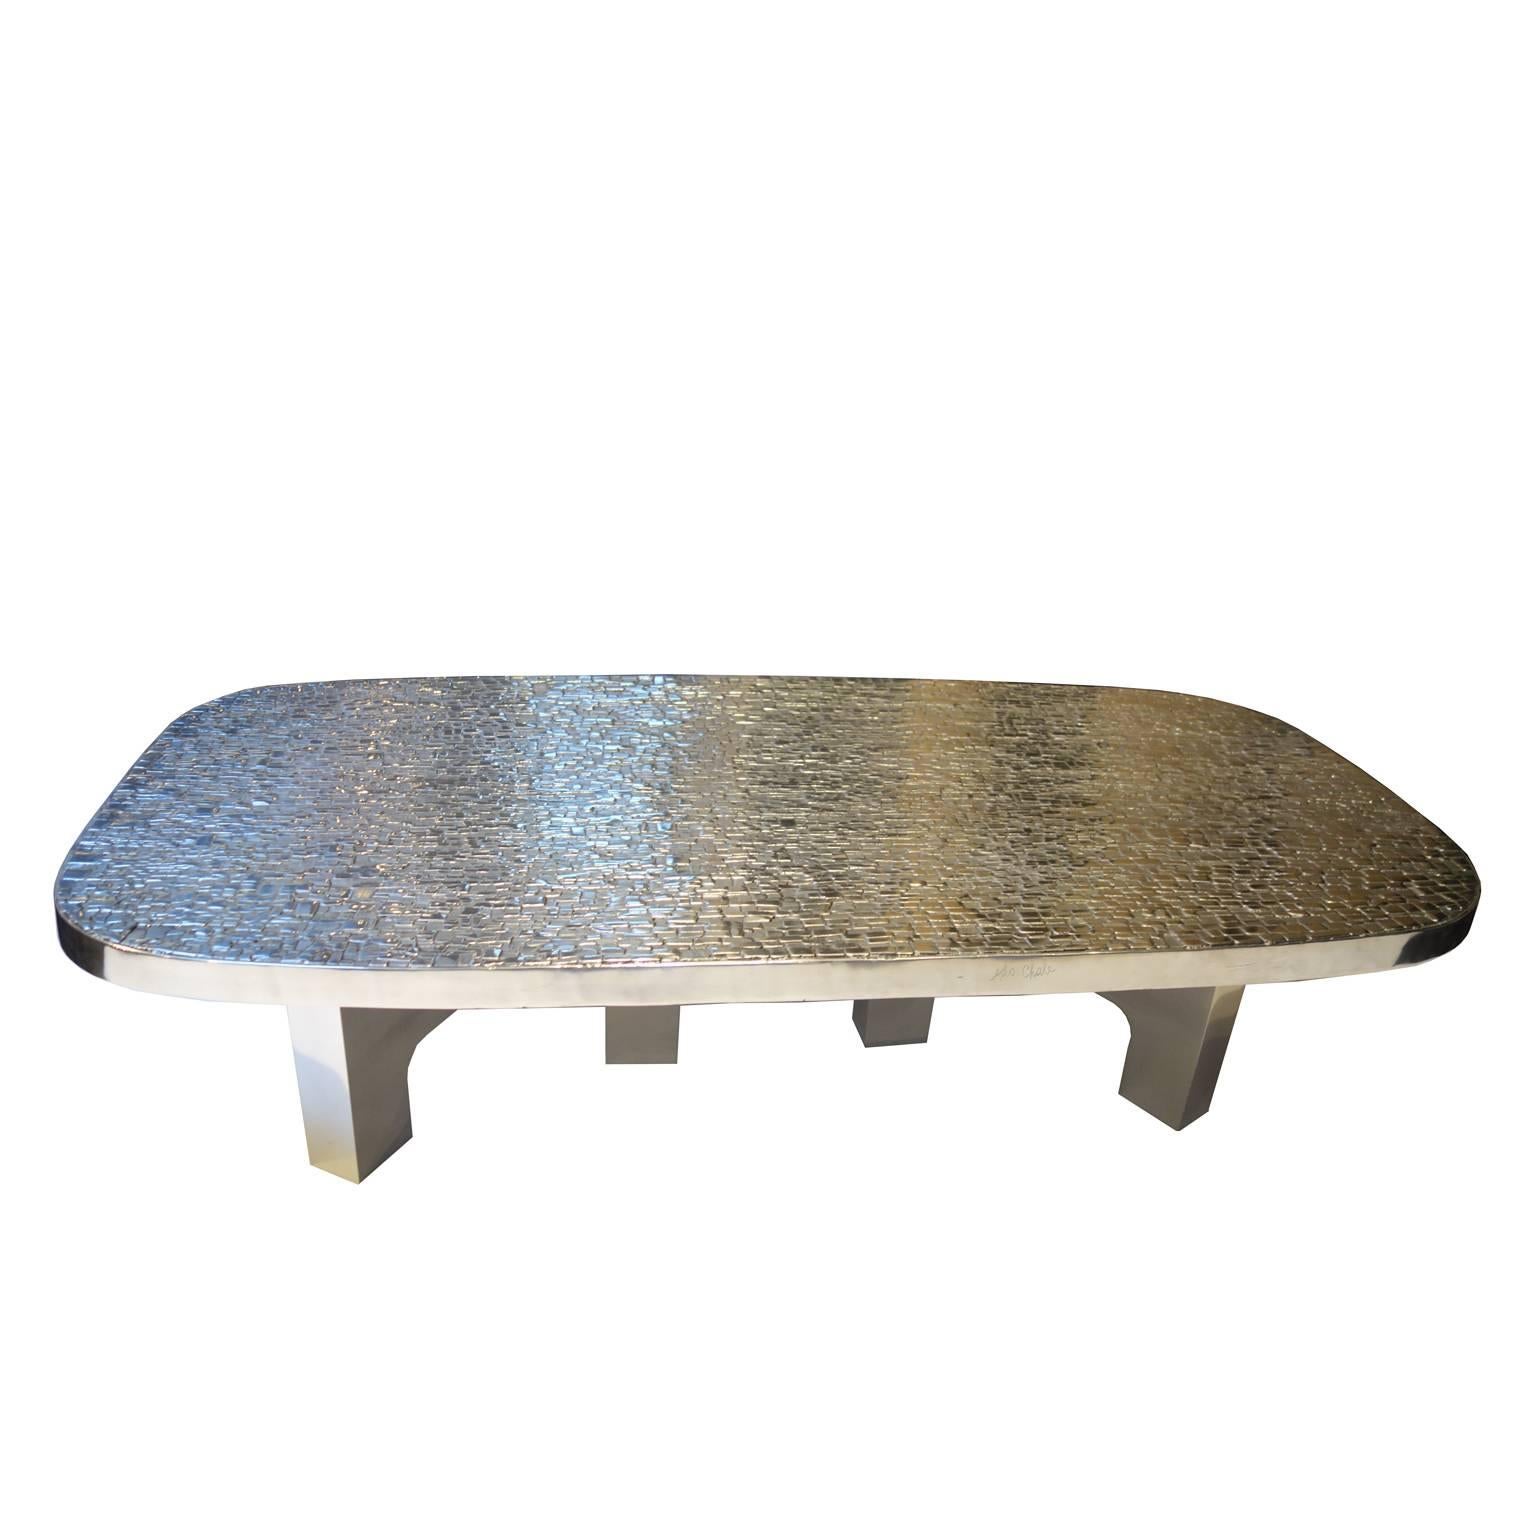 Aluminum coffee table, model 